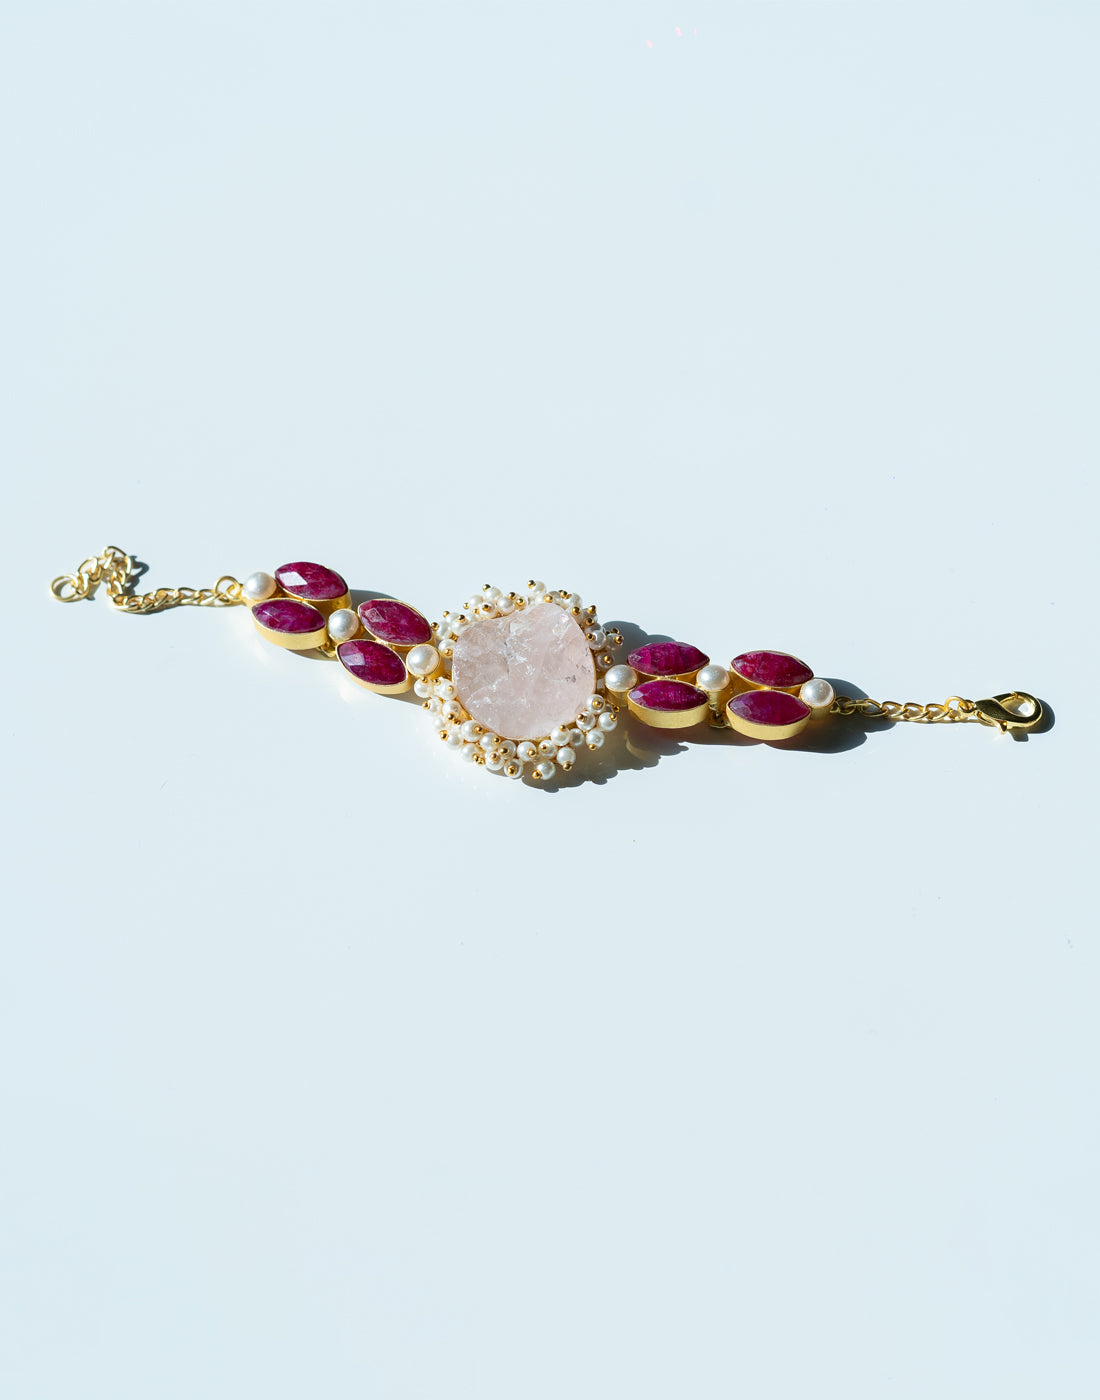 Rose & Haathi Bracelet- Handcrafted Jewellery from Dori